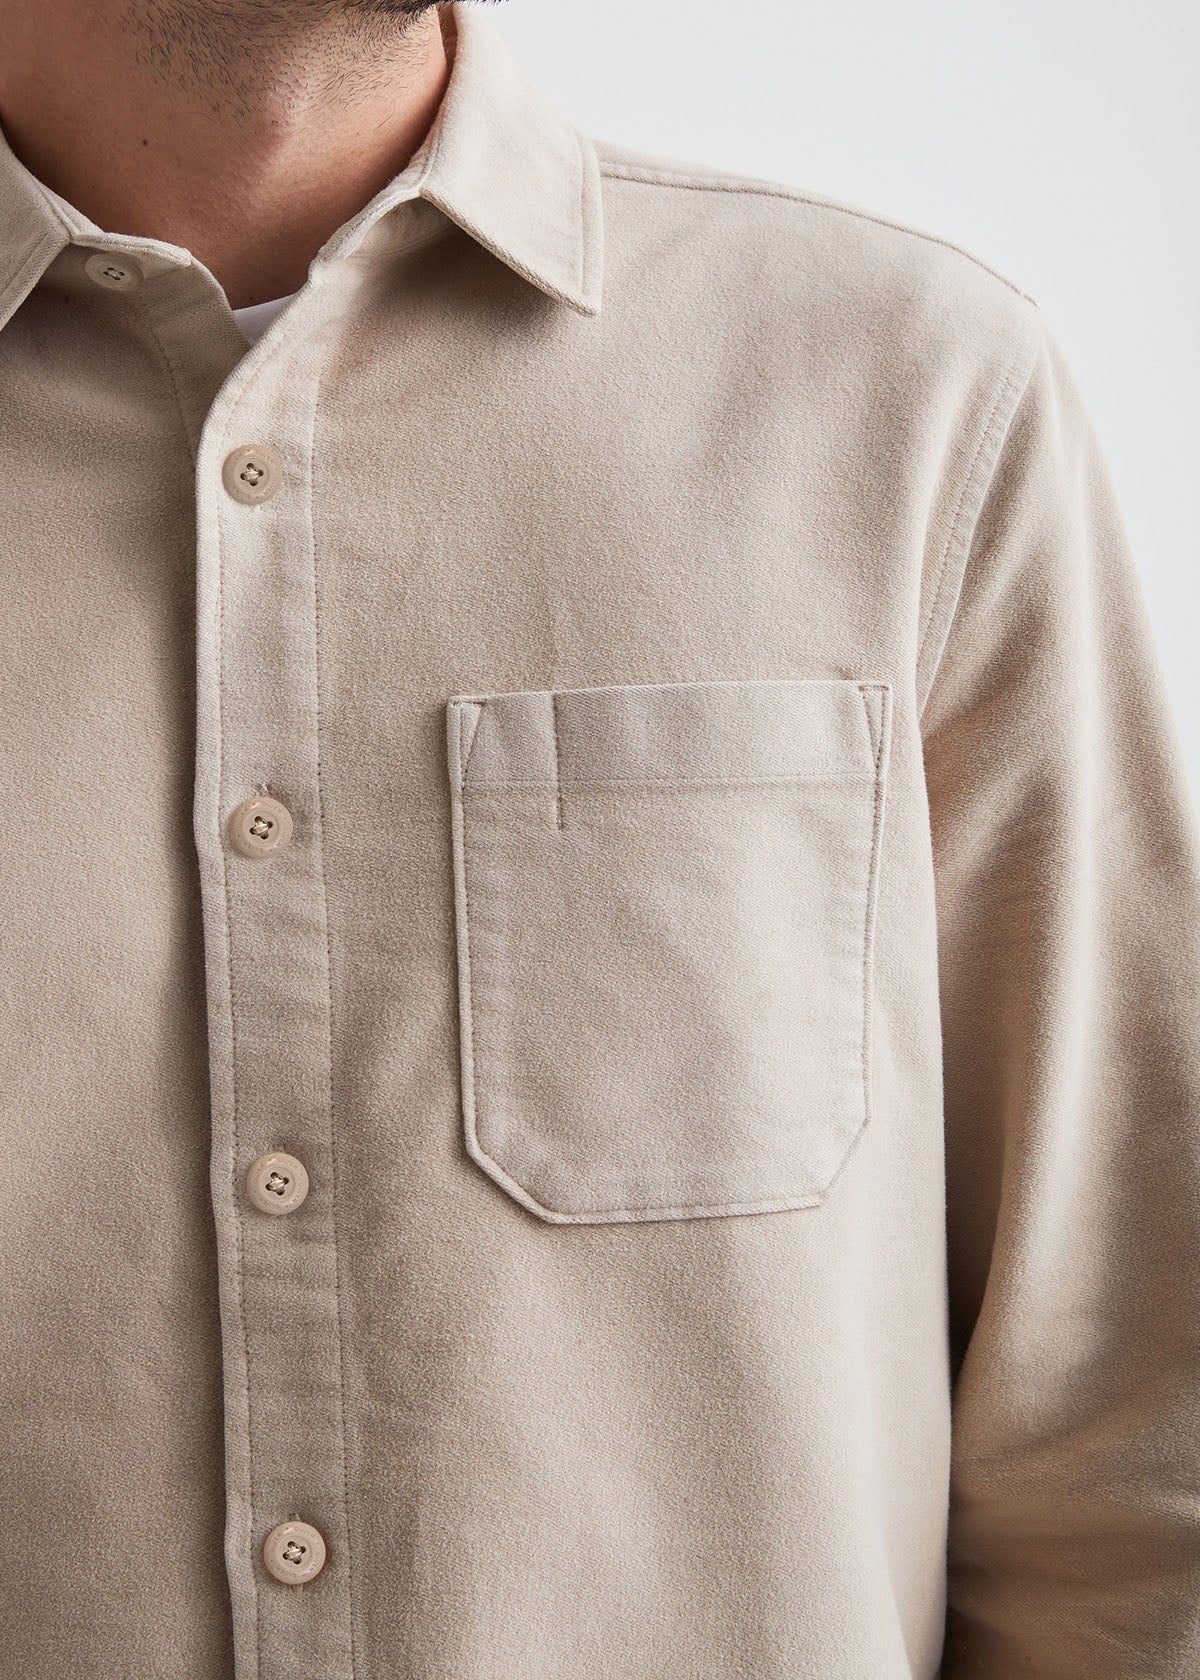 mens khaki brown relaxed moleskin button up shirt buttons and pocket detail